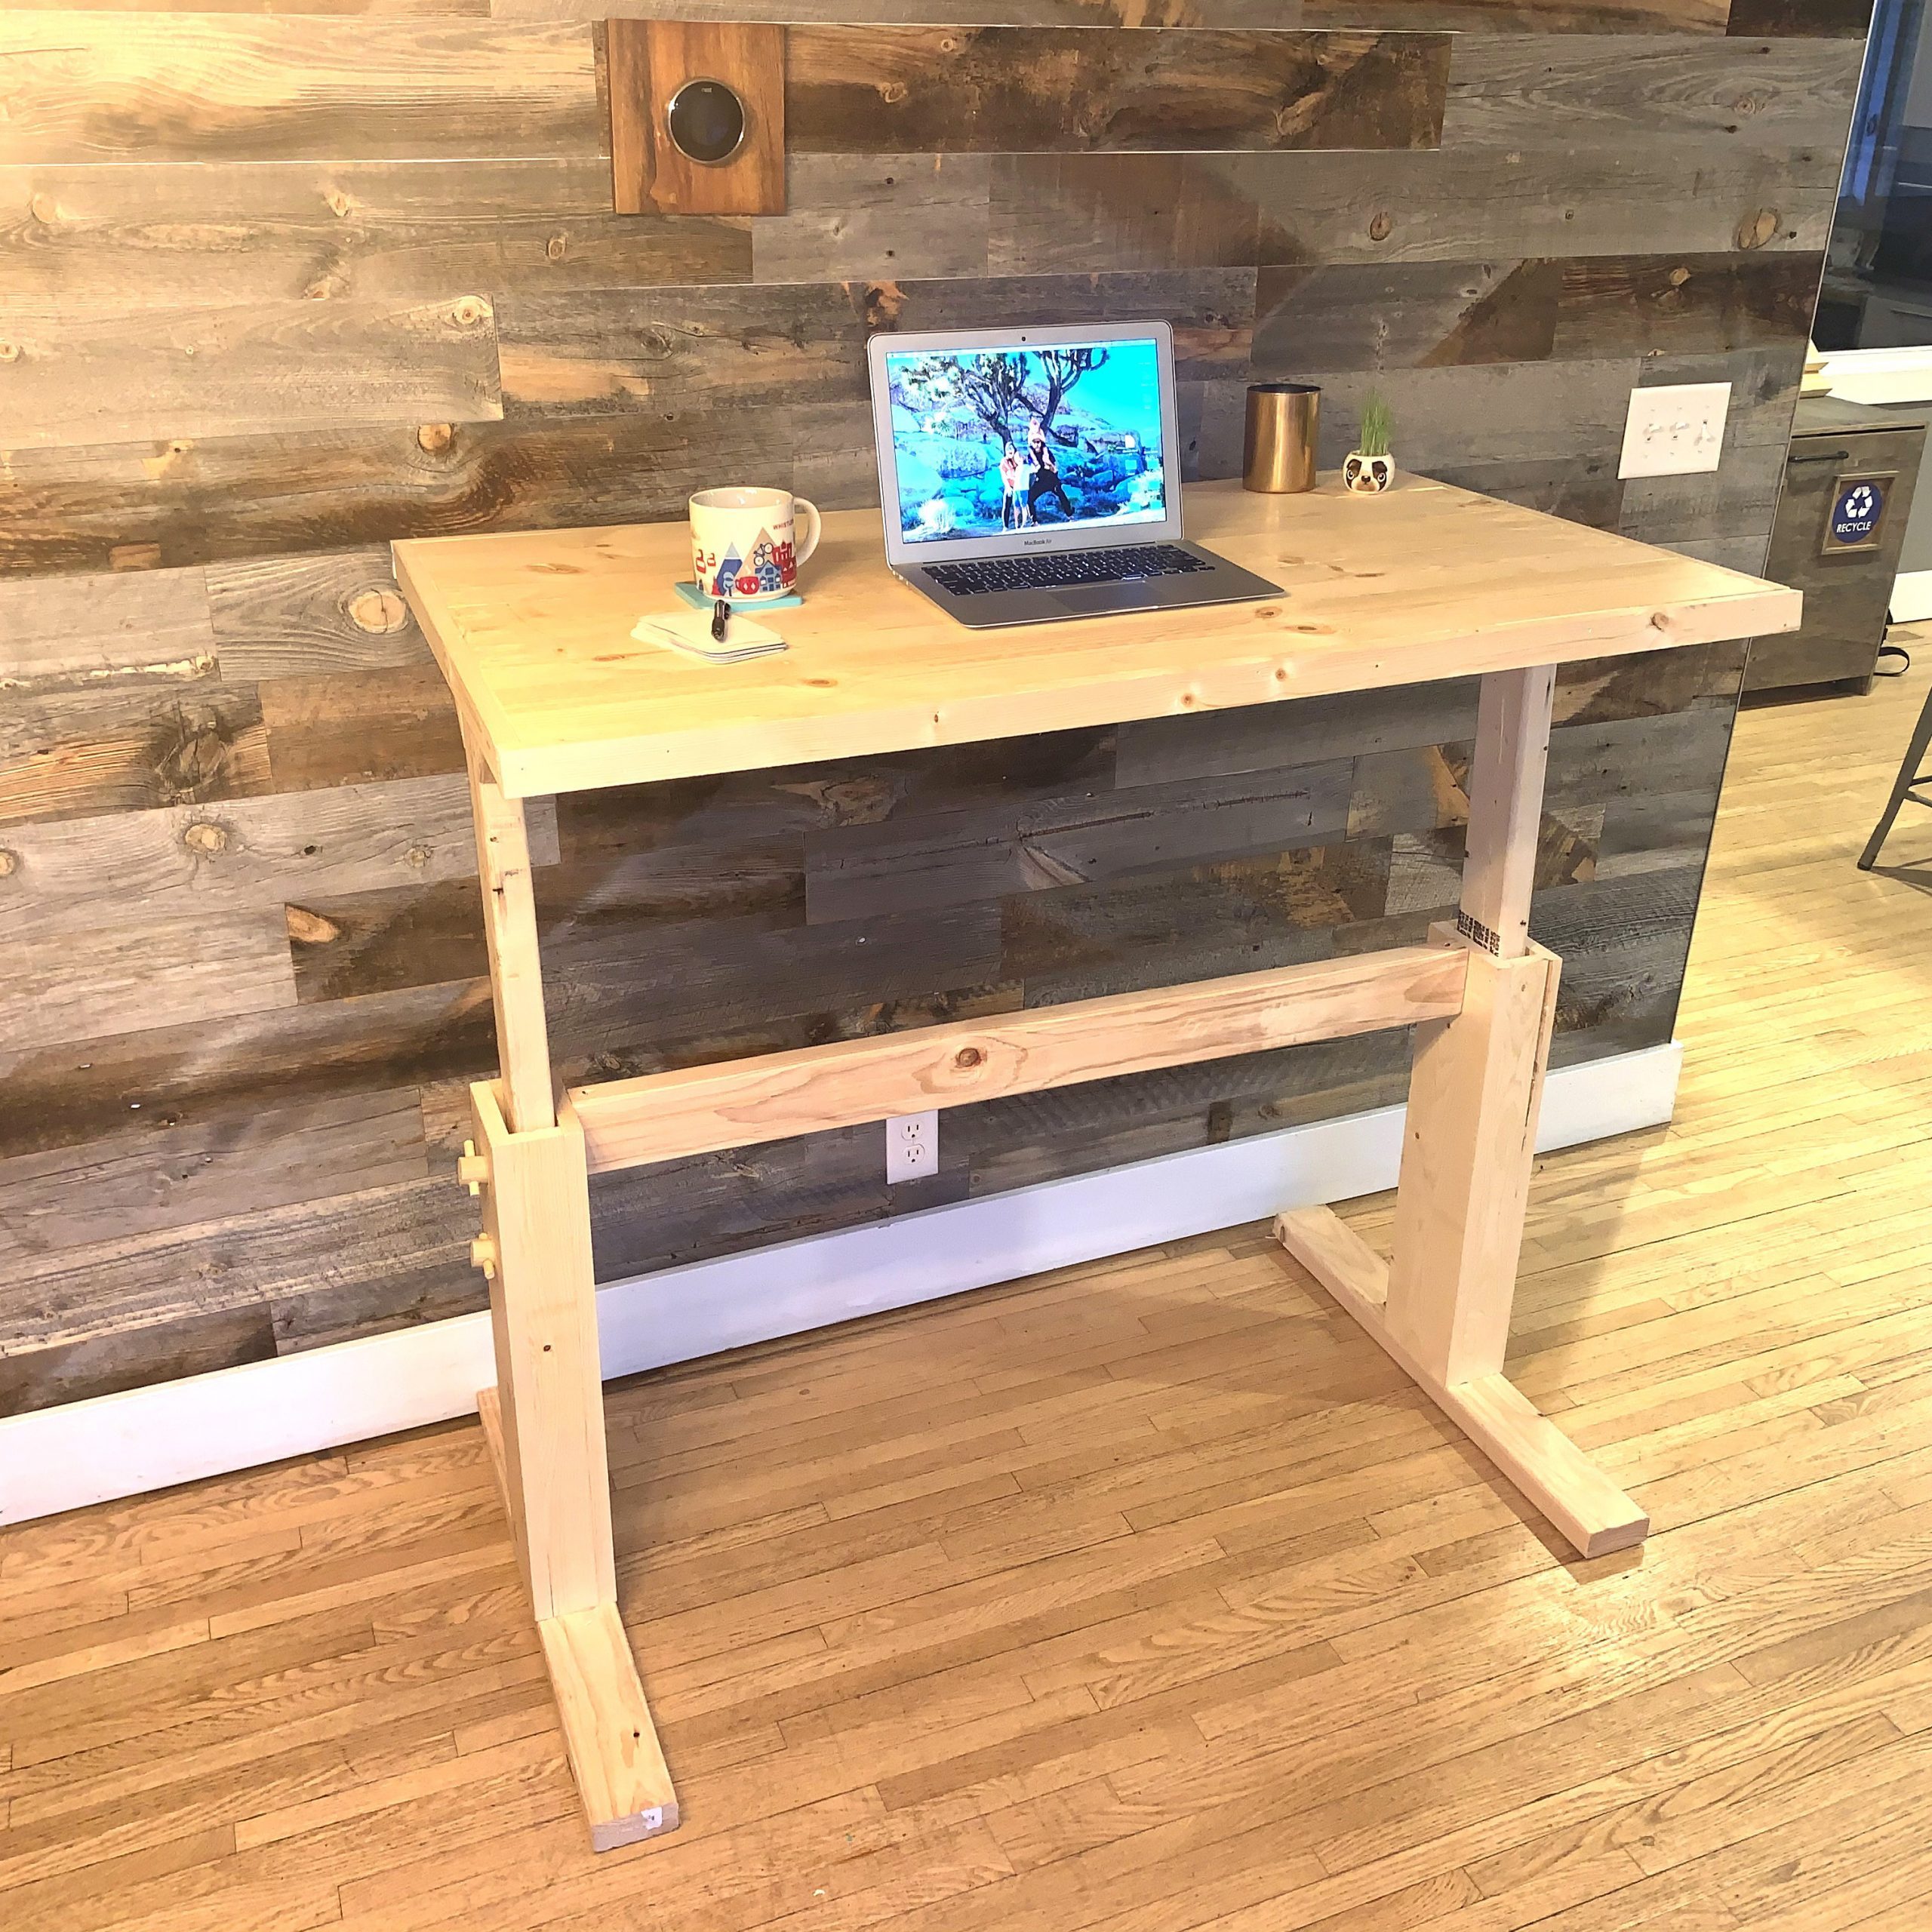 3D Printable Kochlöffel - DIY height adjustable table on a budget